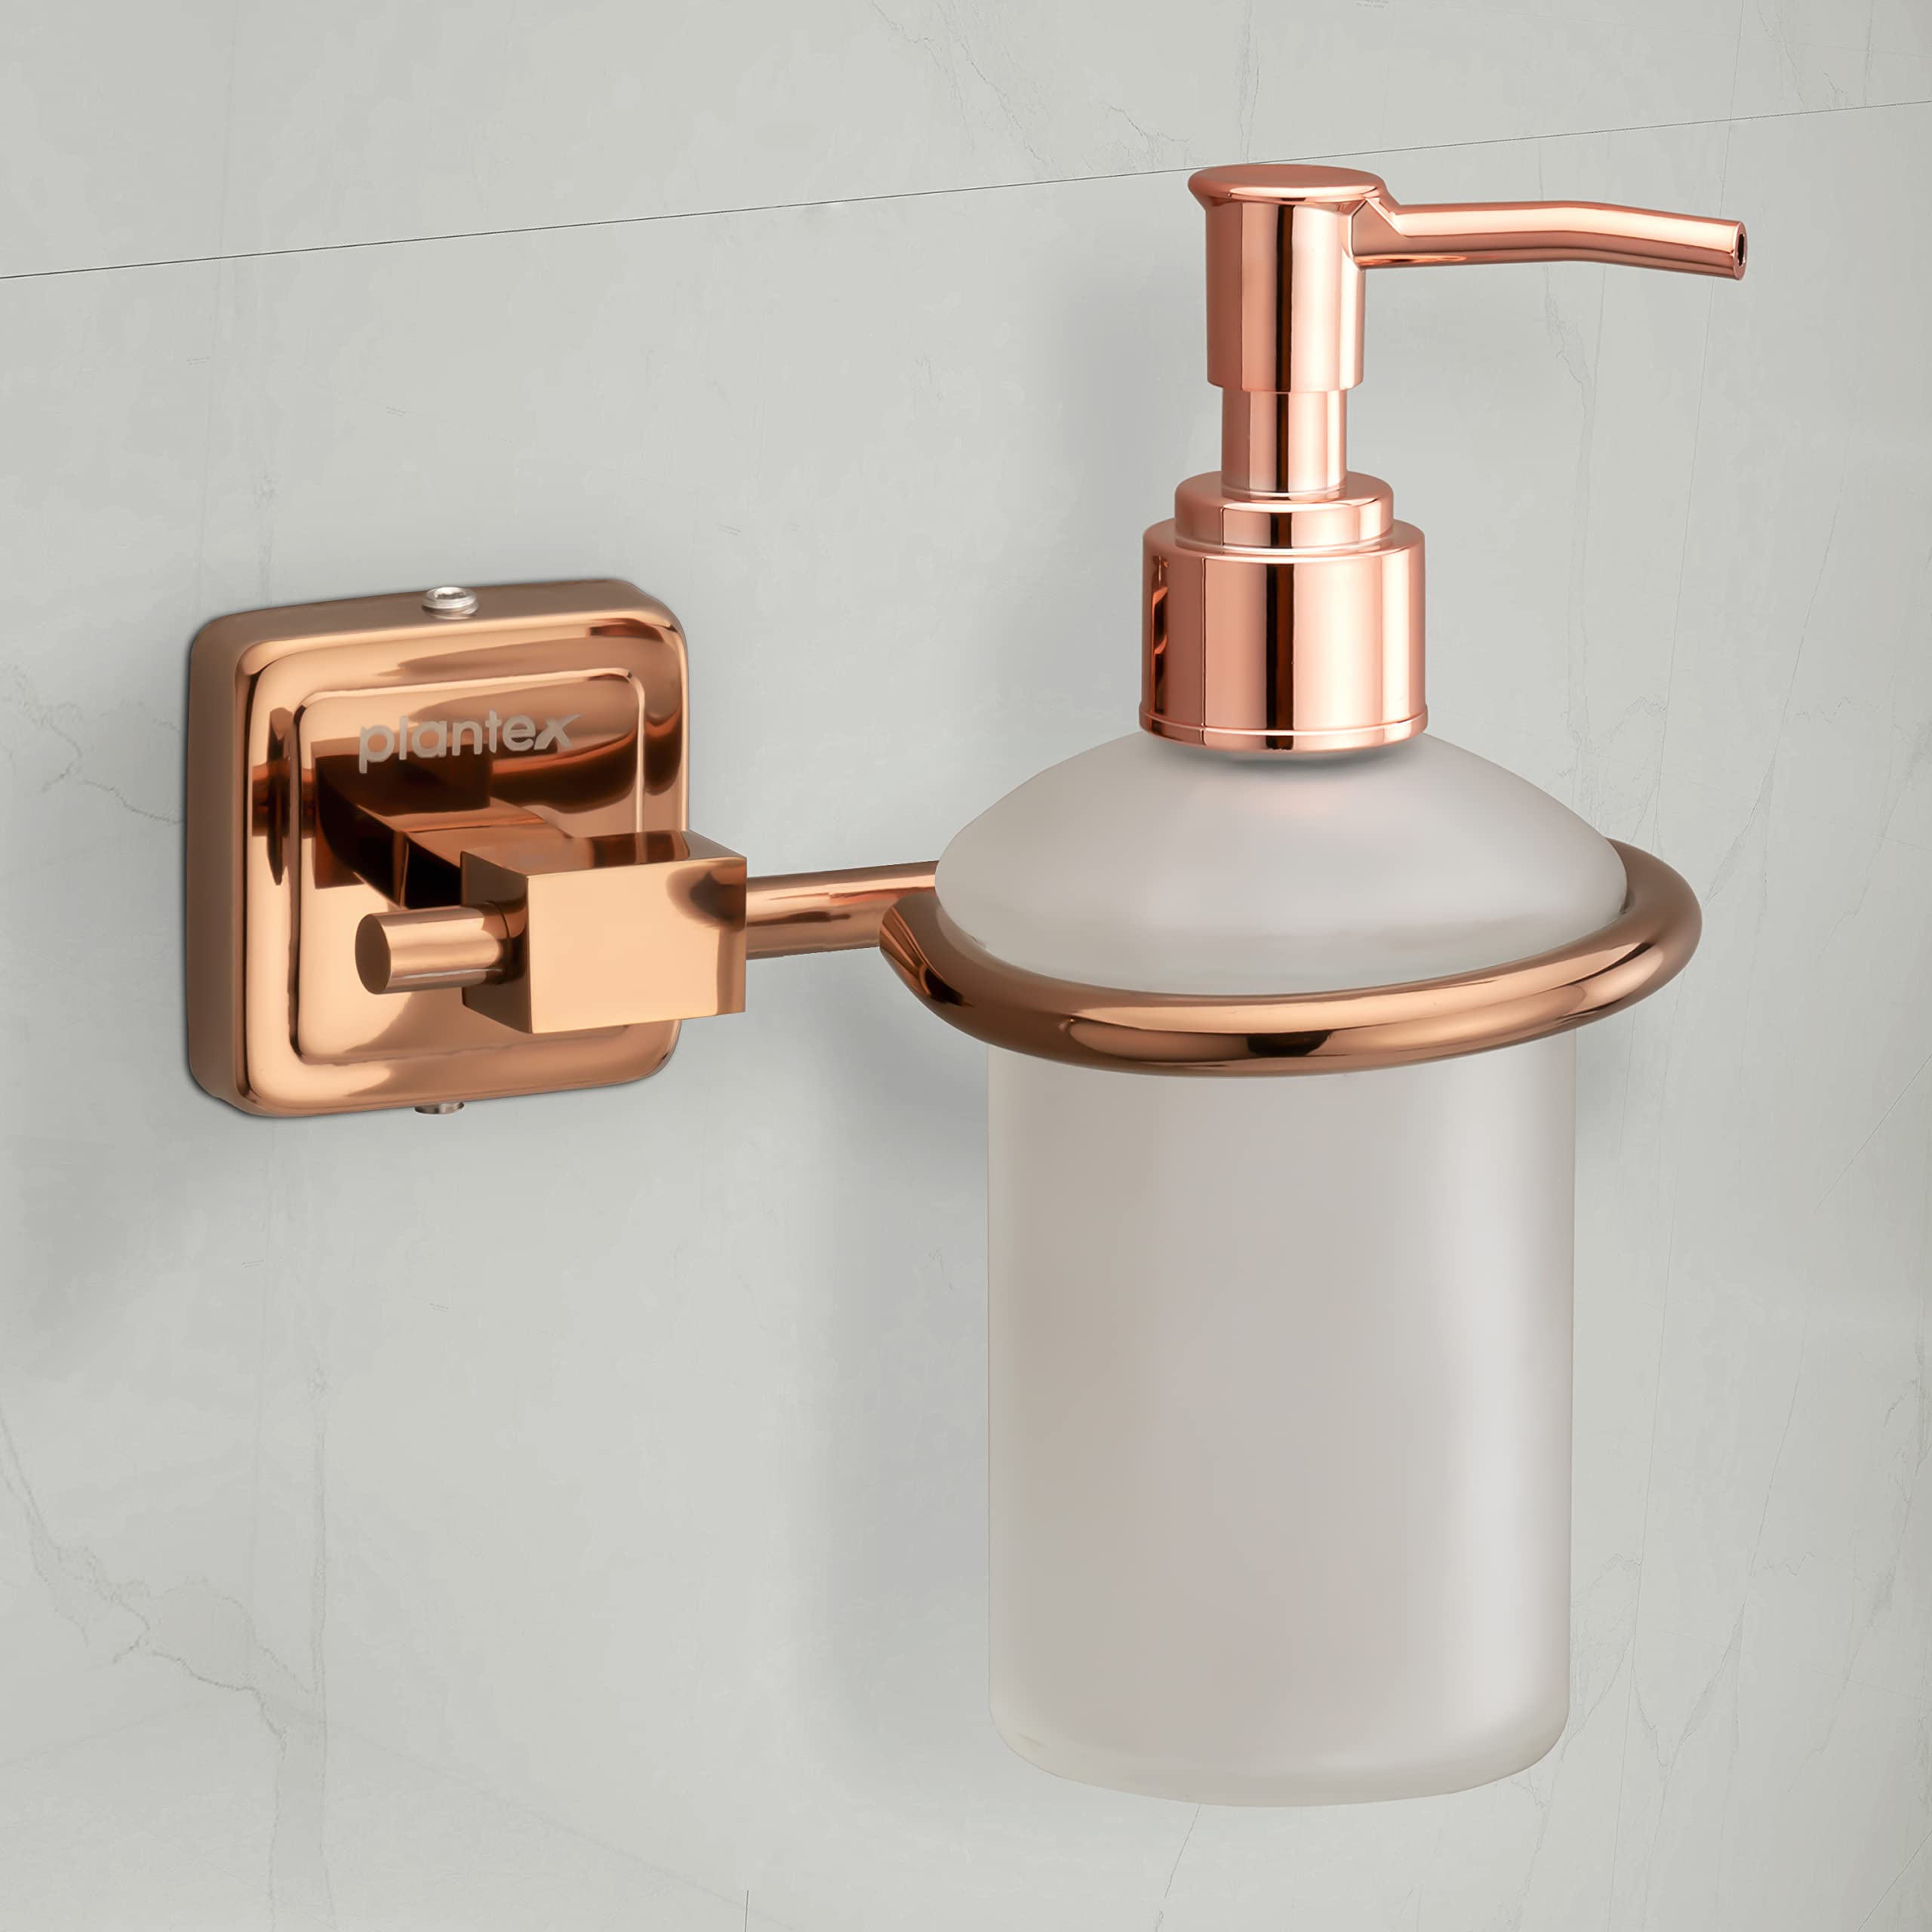 Plantex 304 Grade Stainless Steel Decan Liquid Soap Dispenser/Shampoo Dispenser/Hand Wash Dispenser/Bathroom Accessories - Pack of 4 (654 - PVD Rose Gold)